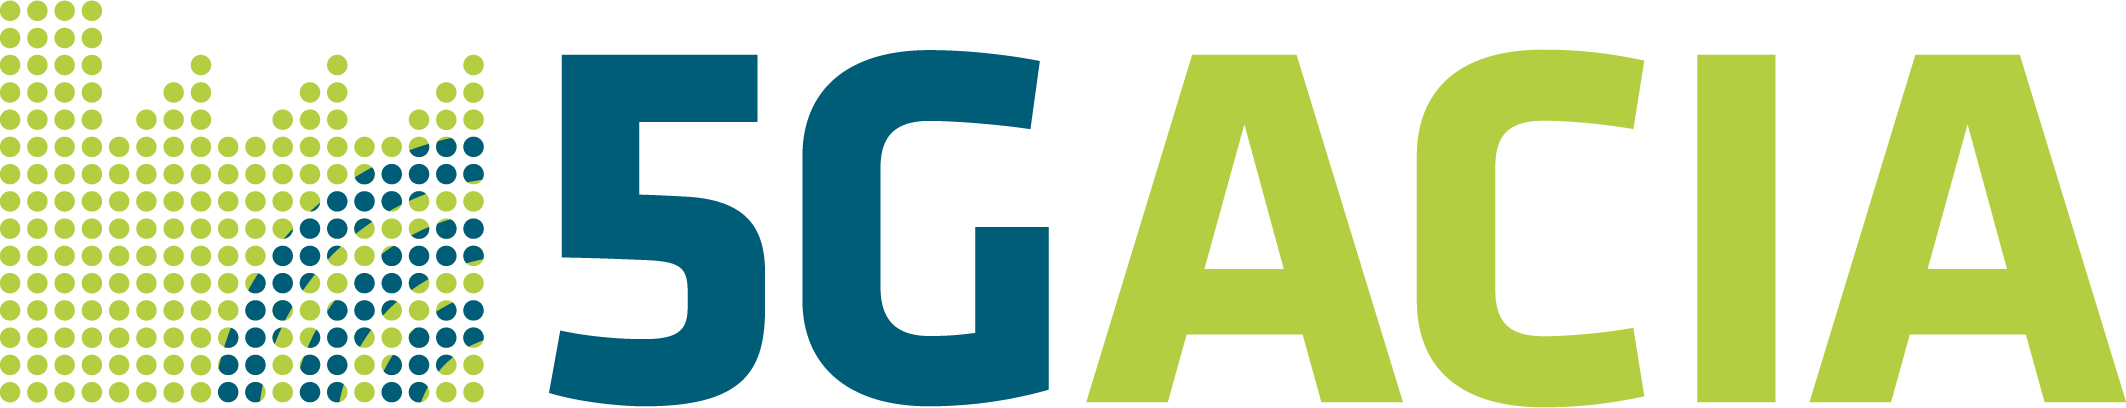 5G-ACIA logo